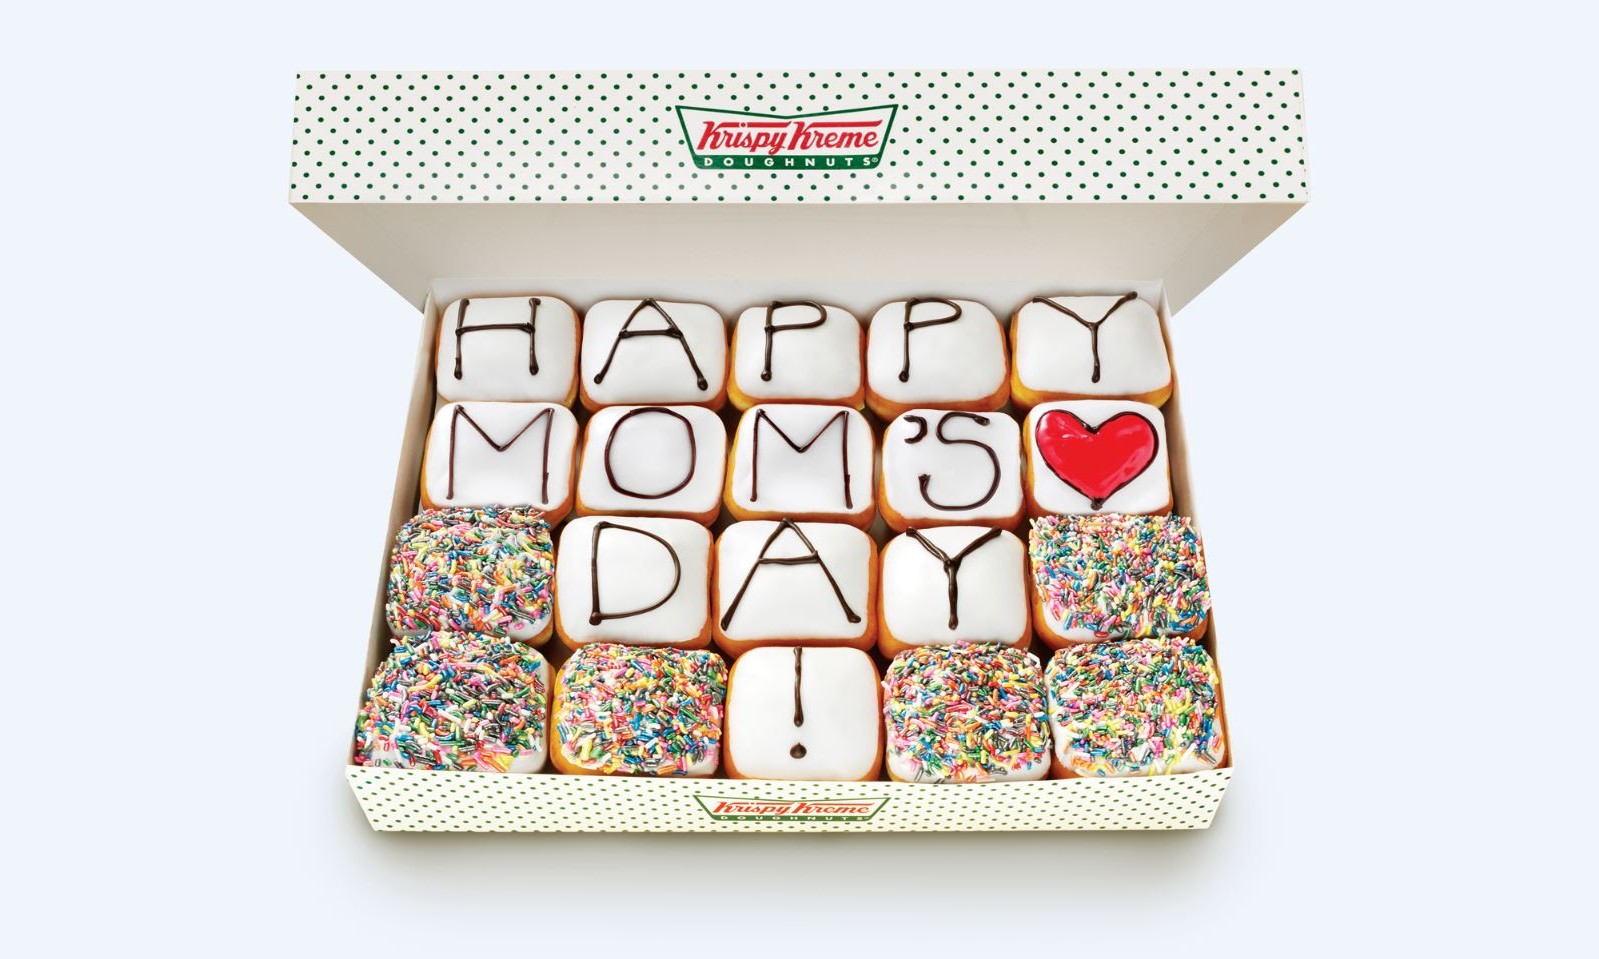 Krispy Kreme lets doughnuts do the talking last Mother's Day